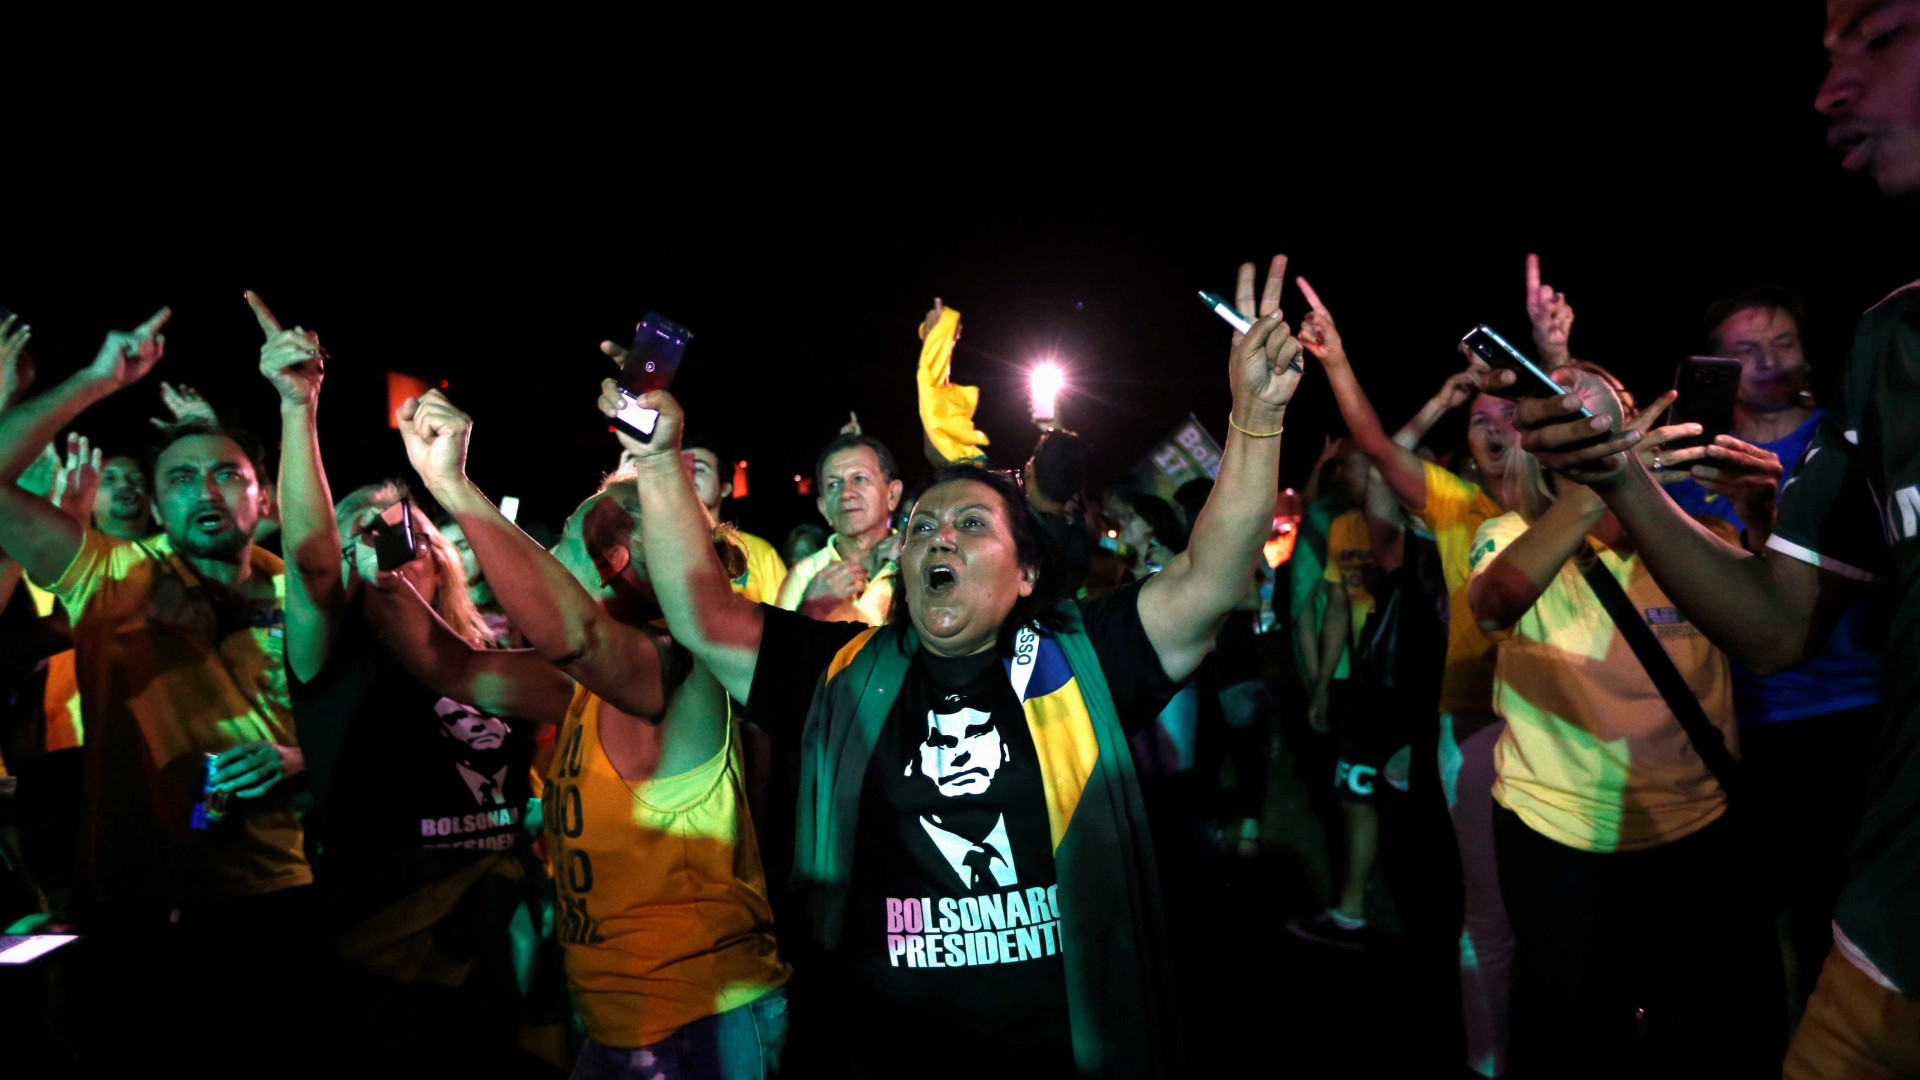 Imprensa internacional repercute vantagem de Bolsonaro